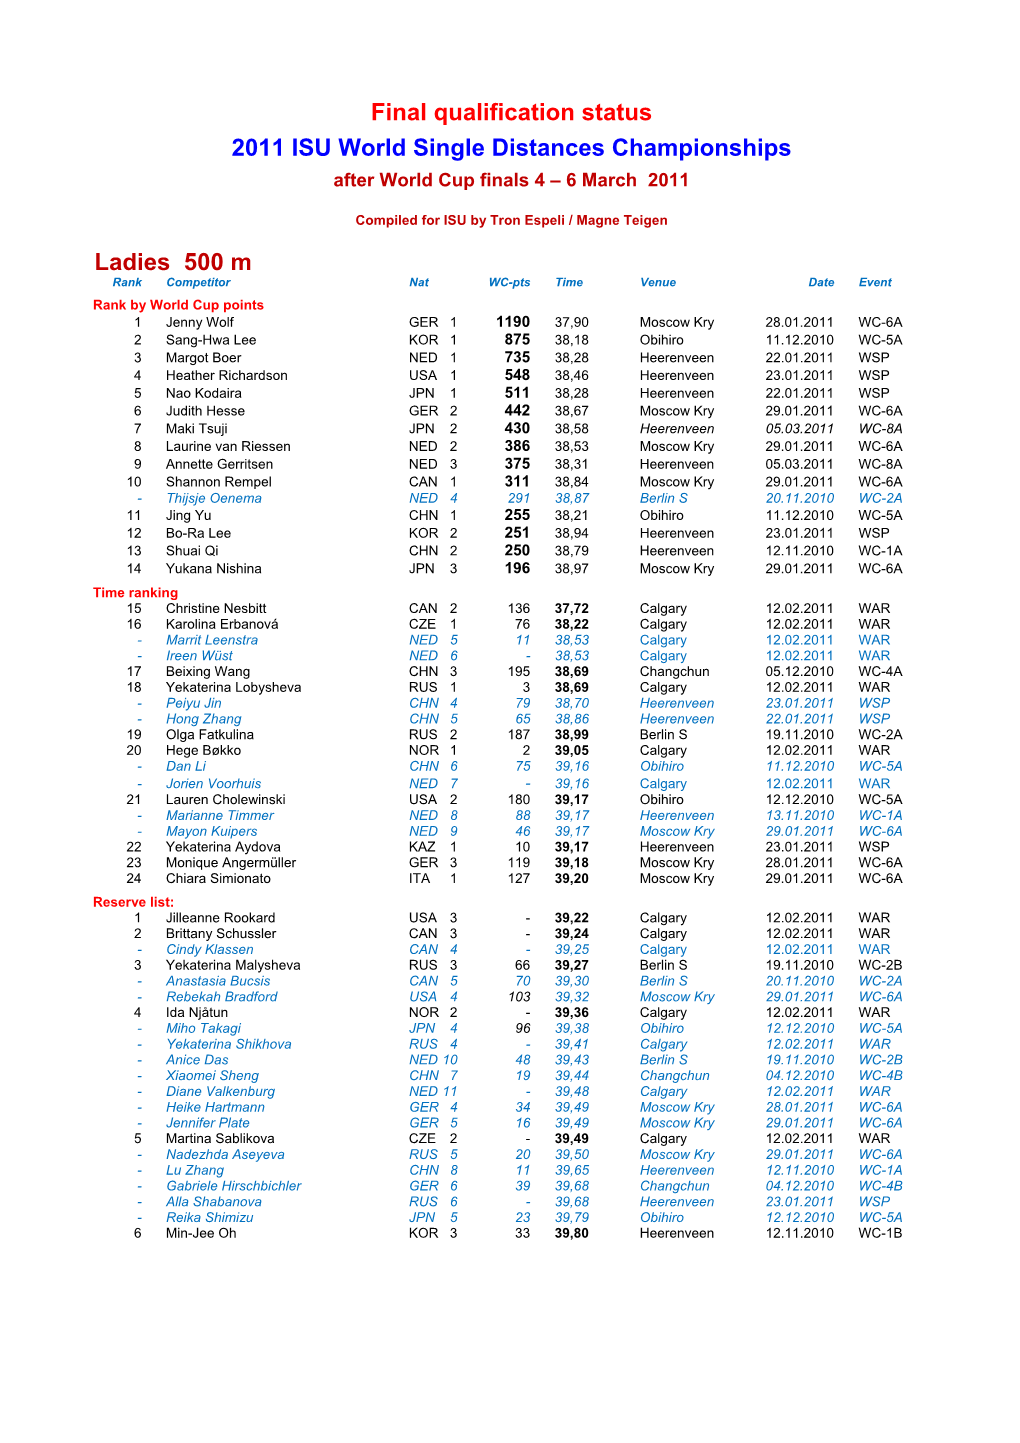 Final Qualification Status 2011 ISU World Single Distances